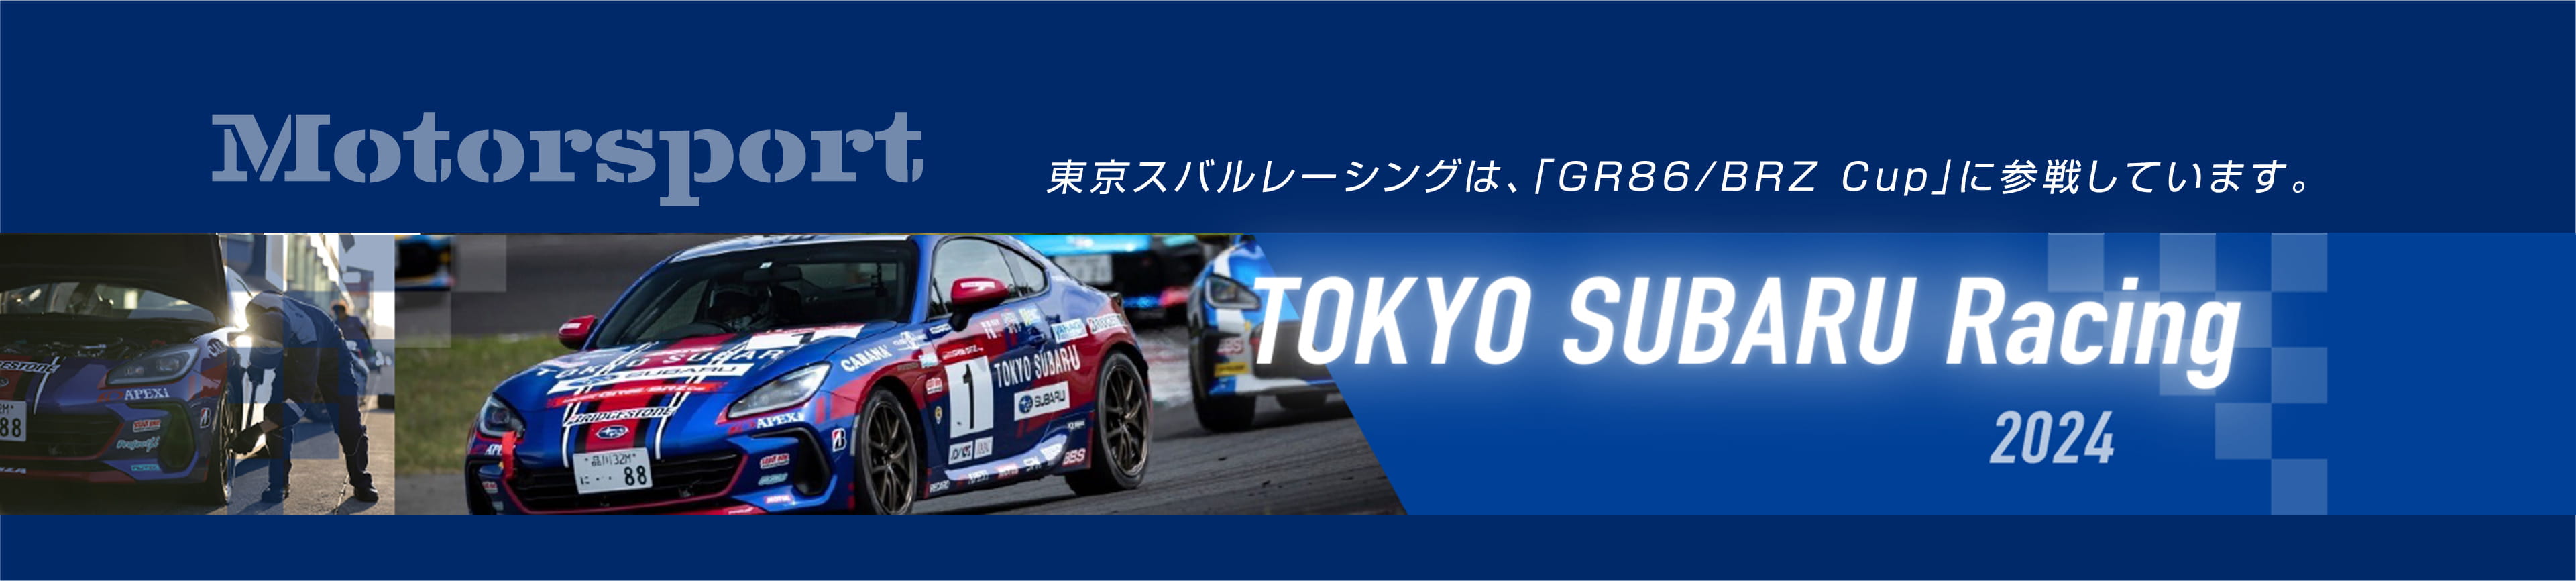 MOTORSPORT 東京スバルレーシングは、「GR86/BRZ Cup」に参戦しています。 TOKYO SUBARU Racing 2024